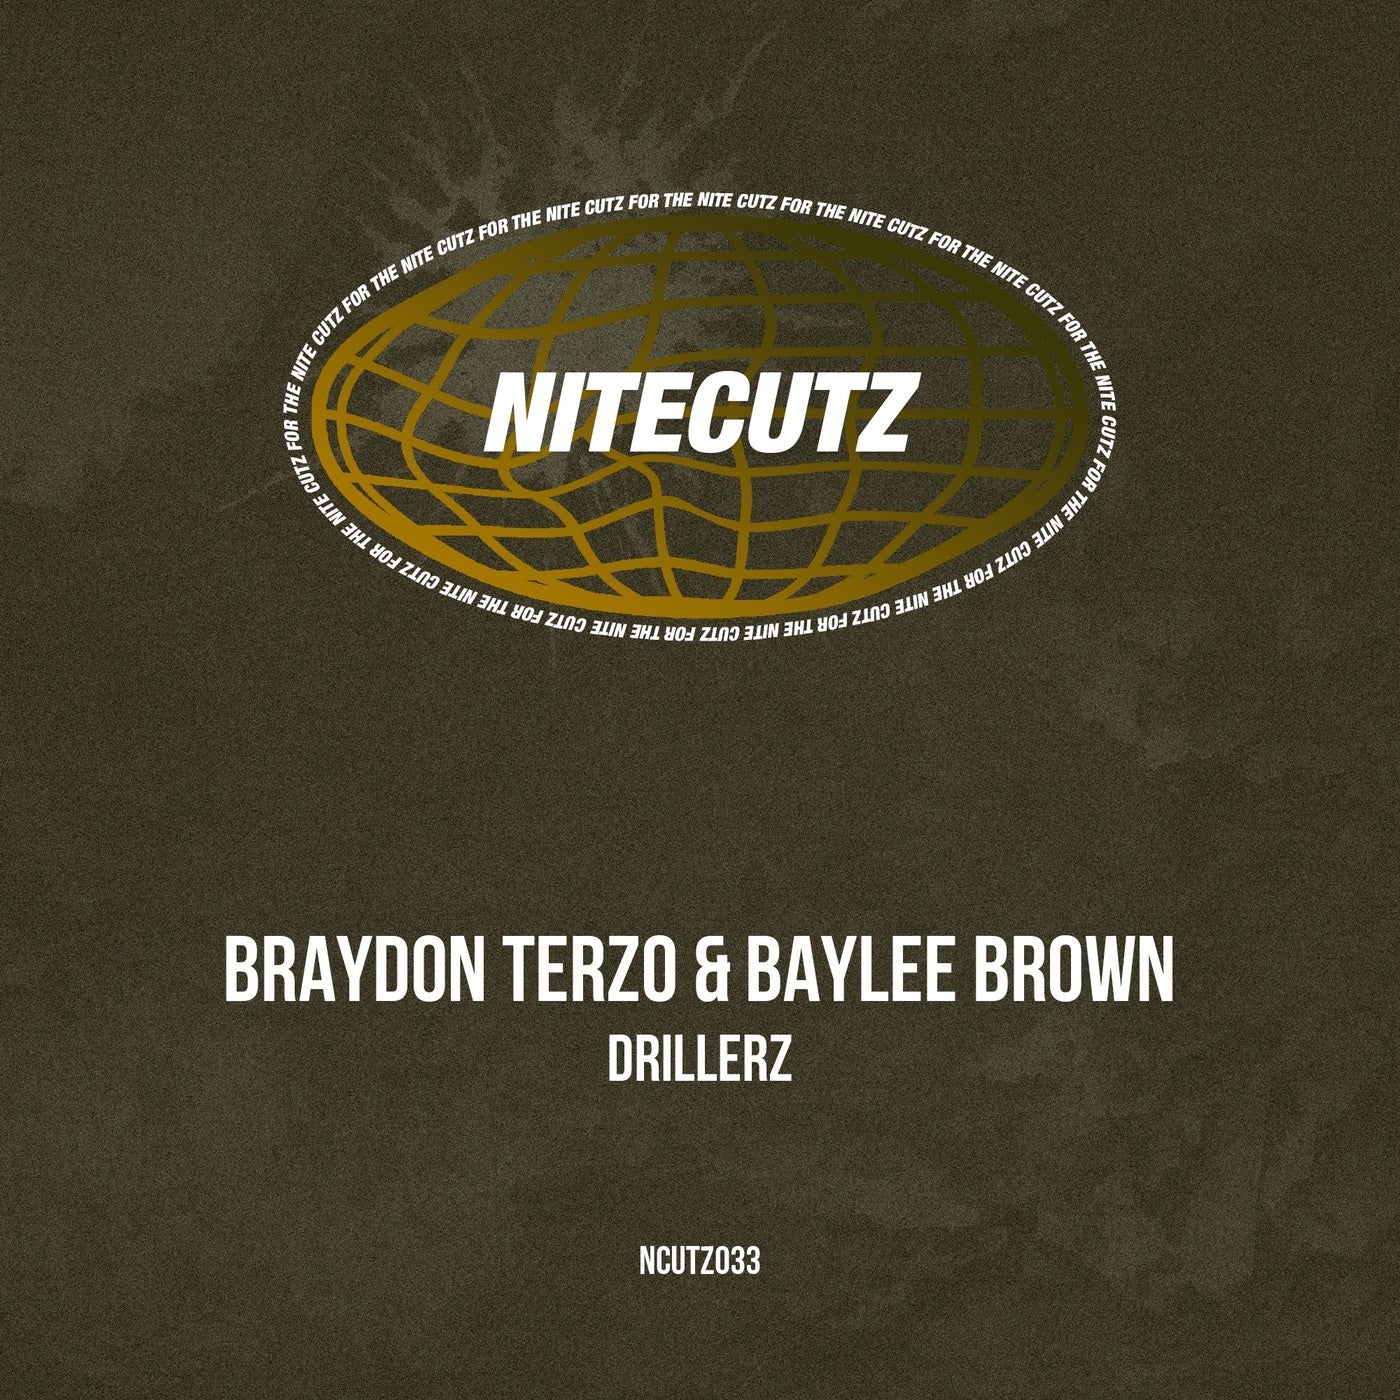 image cover: Baylee Brown, Braydon Terzo - DrillerZ on Nitecutz